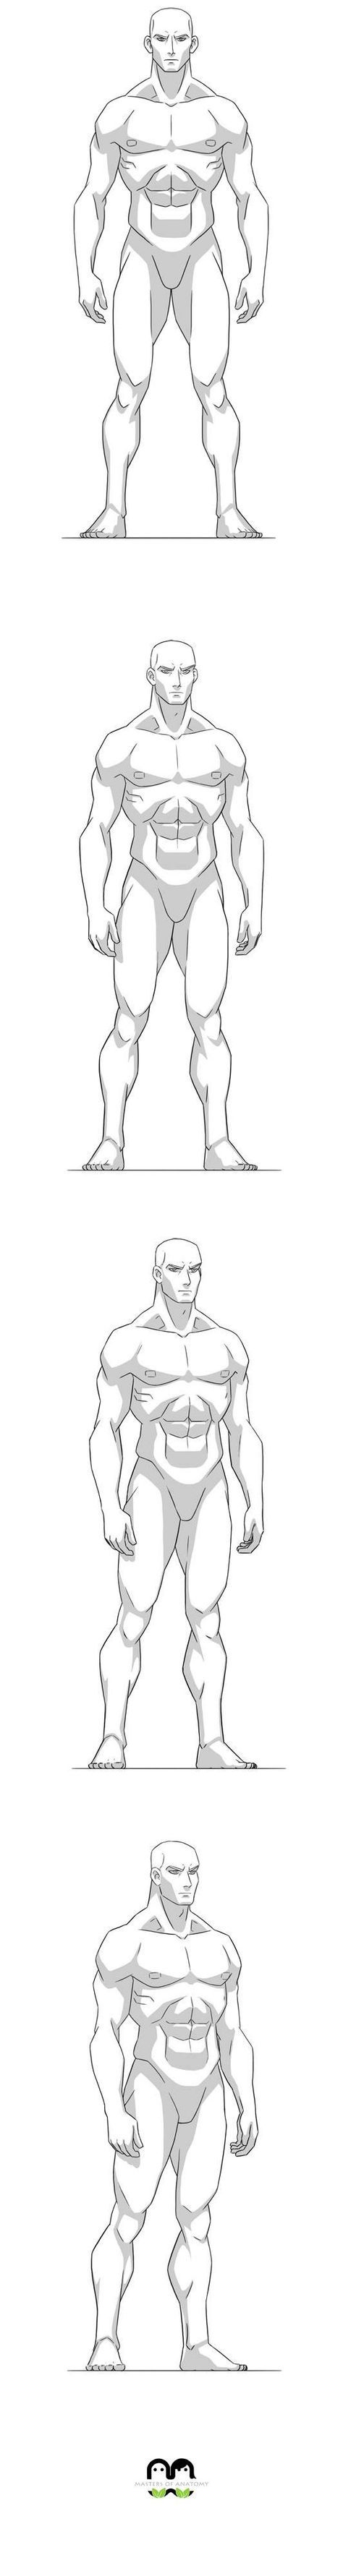 aprender a dibujar cuerpo humano pdf